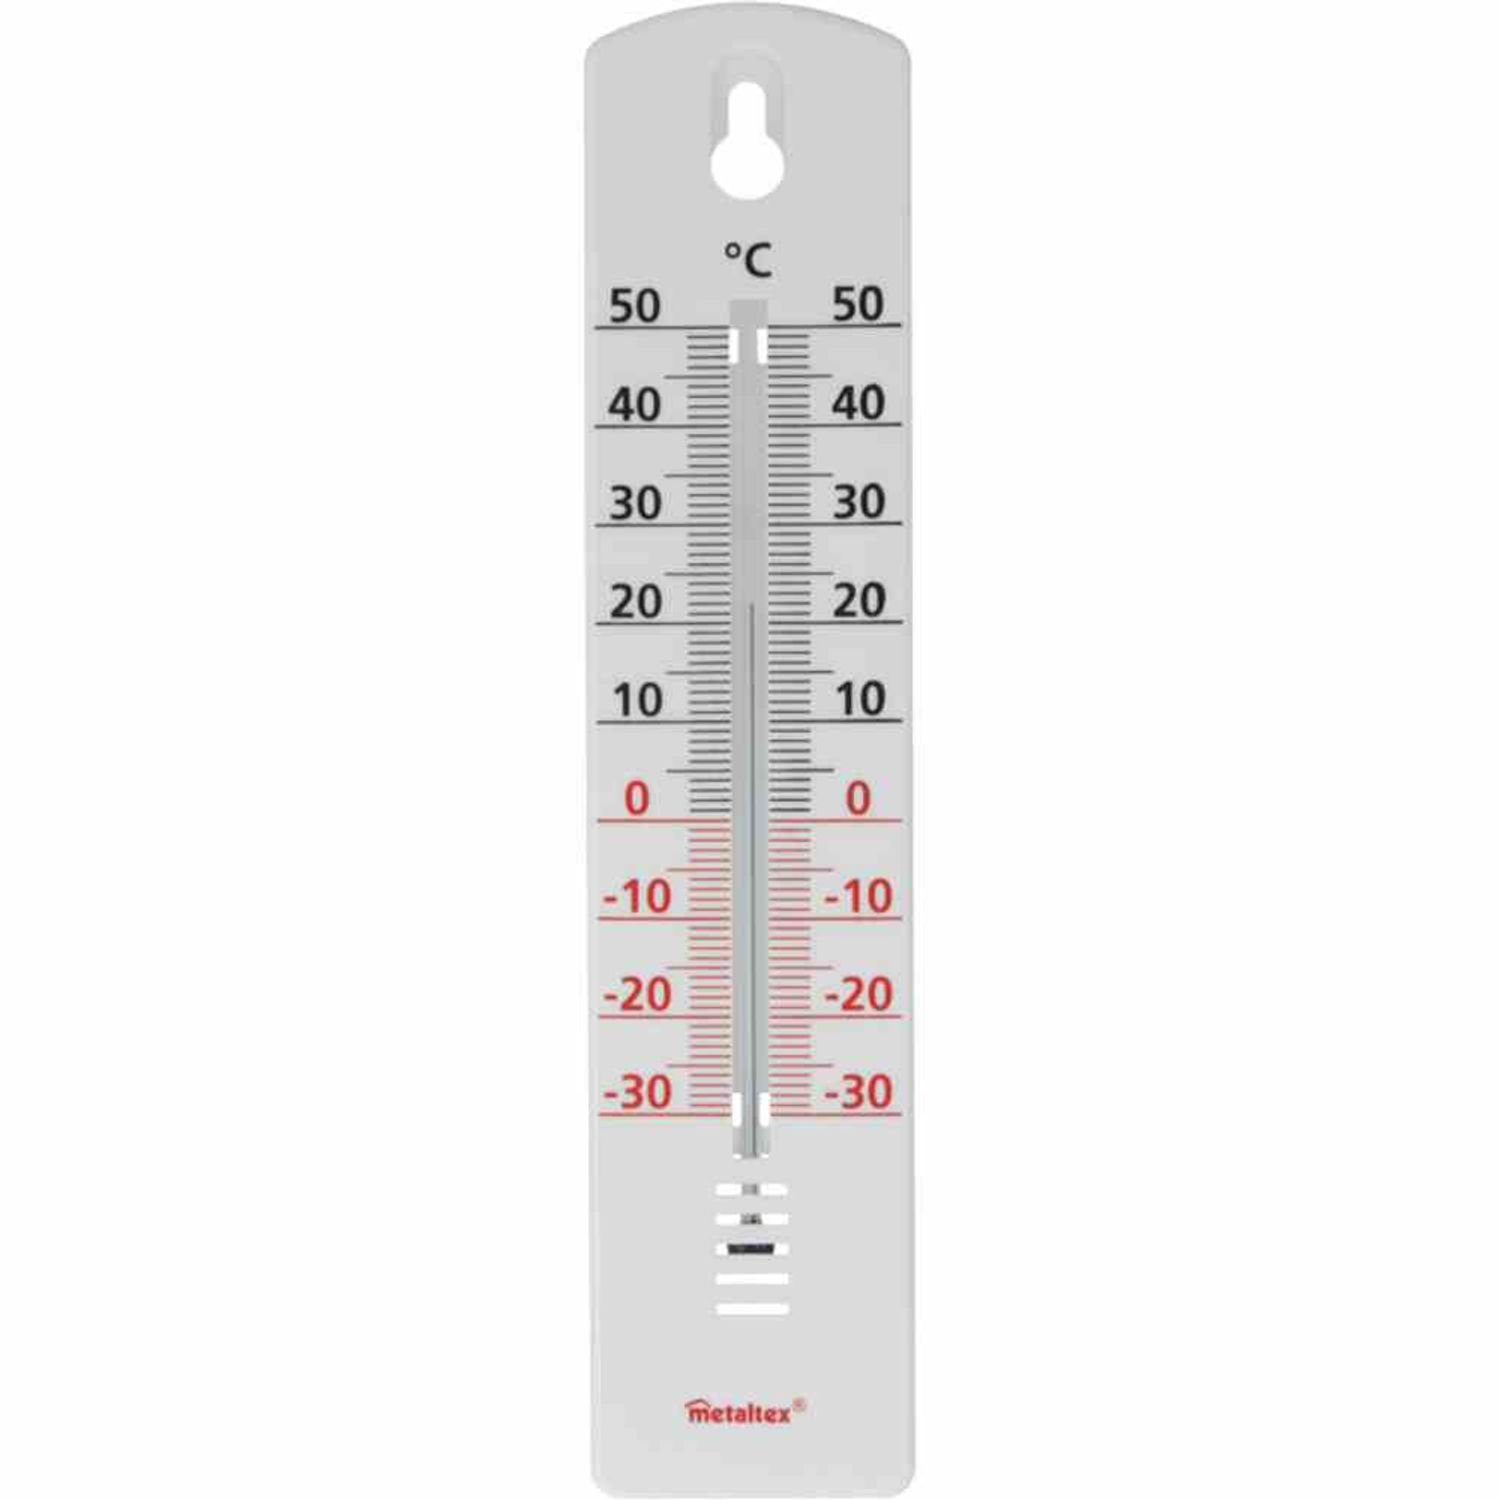 Außenthermometer, 10 cm kabelloses analoges Thermometer und